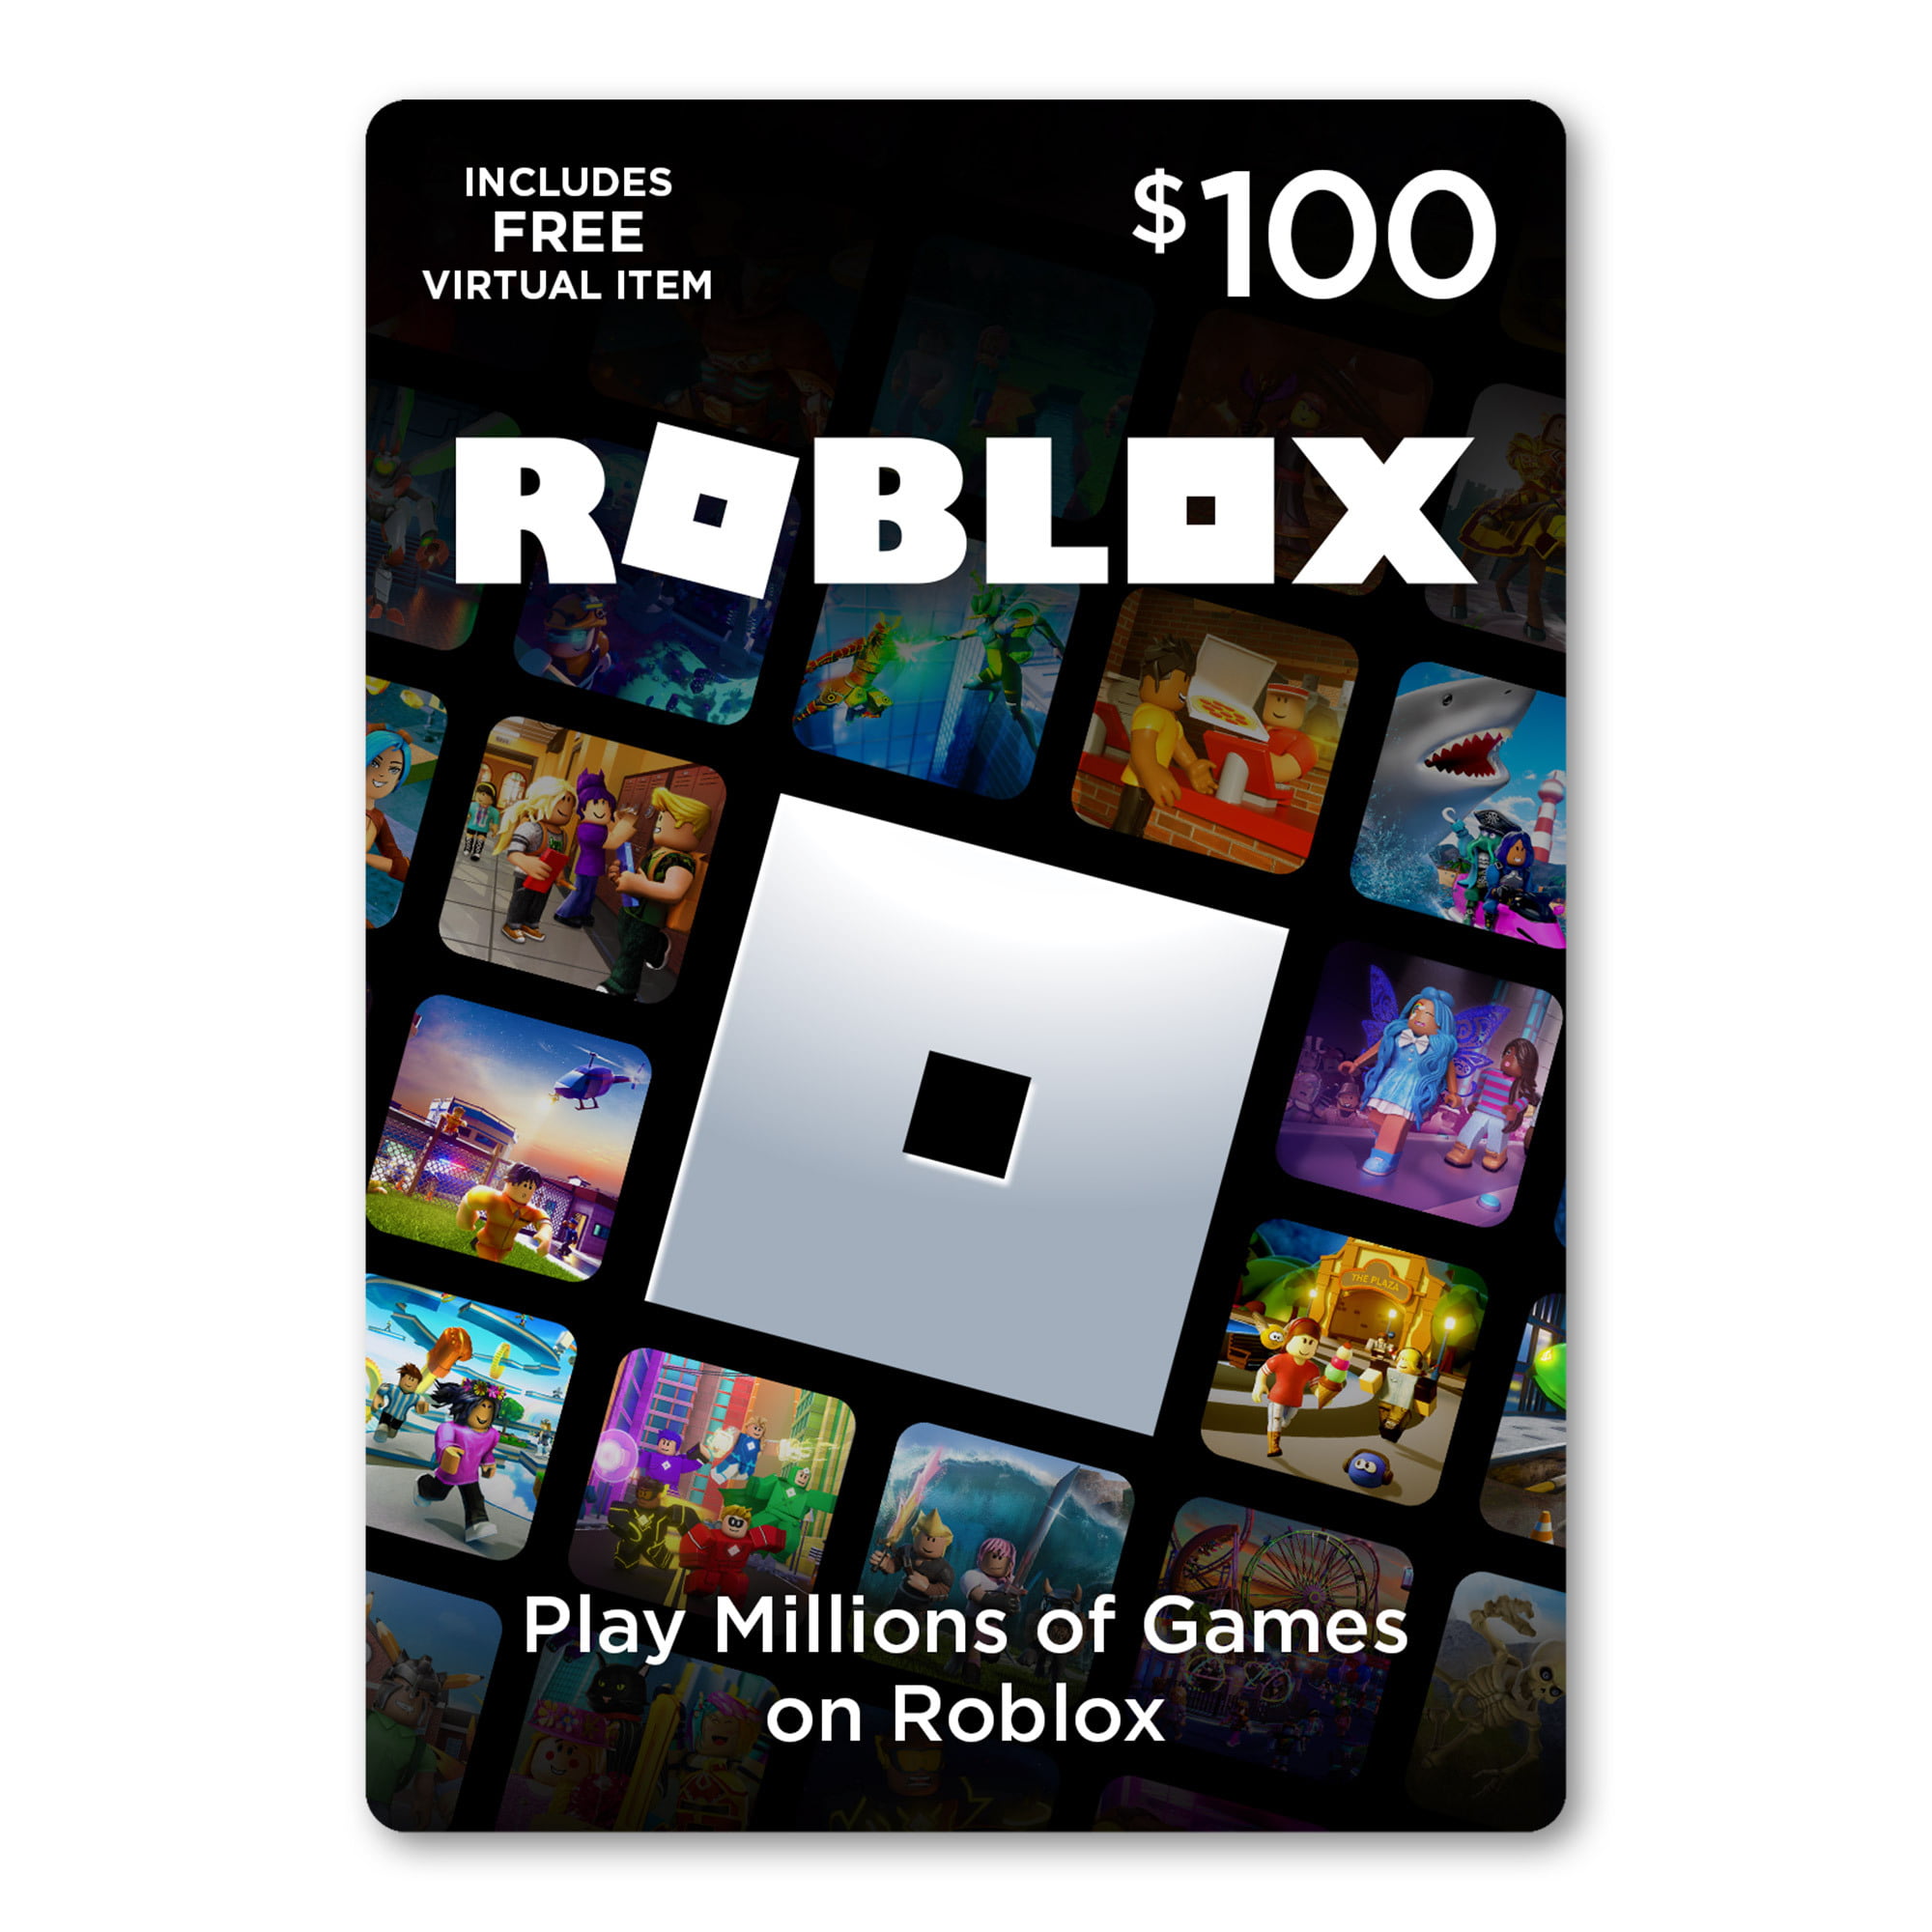 Roblox 100 Digital Gift Card Includes Exclusive Virtual Item Digital Download Walmart Com Walmart Com - roblox gift card chart